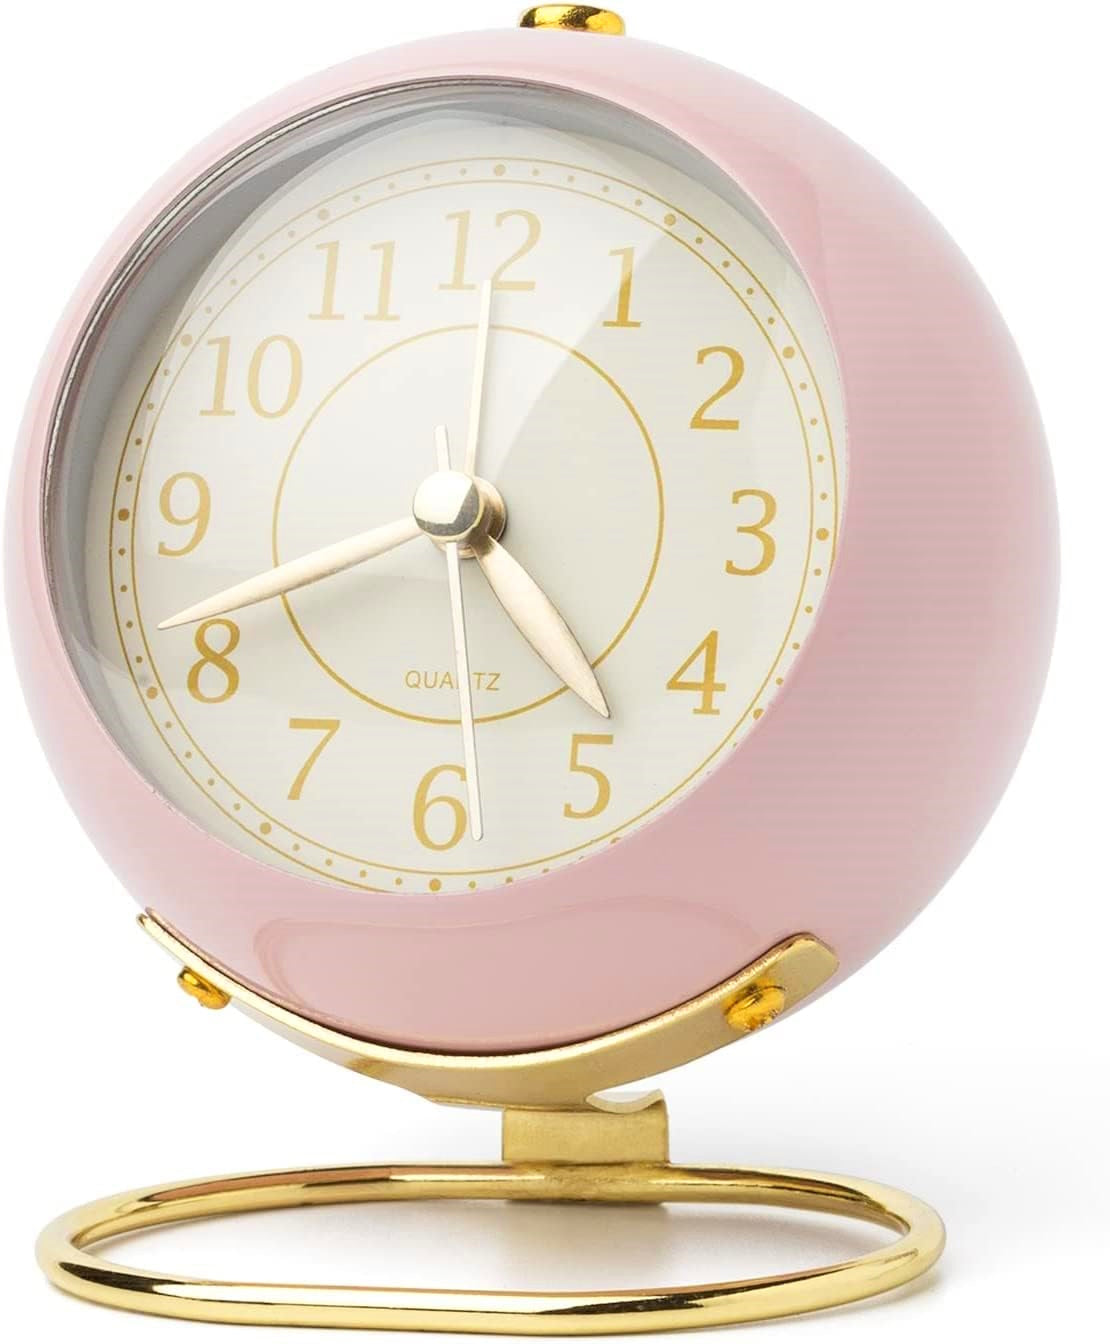 Analog Alarm Clocks, Retro Backlight Cute Simple Design Small Desk Clock Non-Ticking